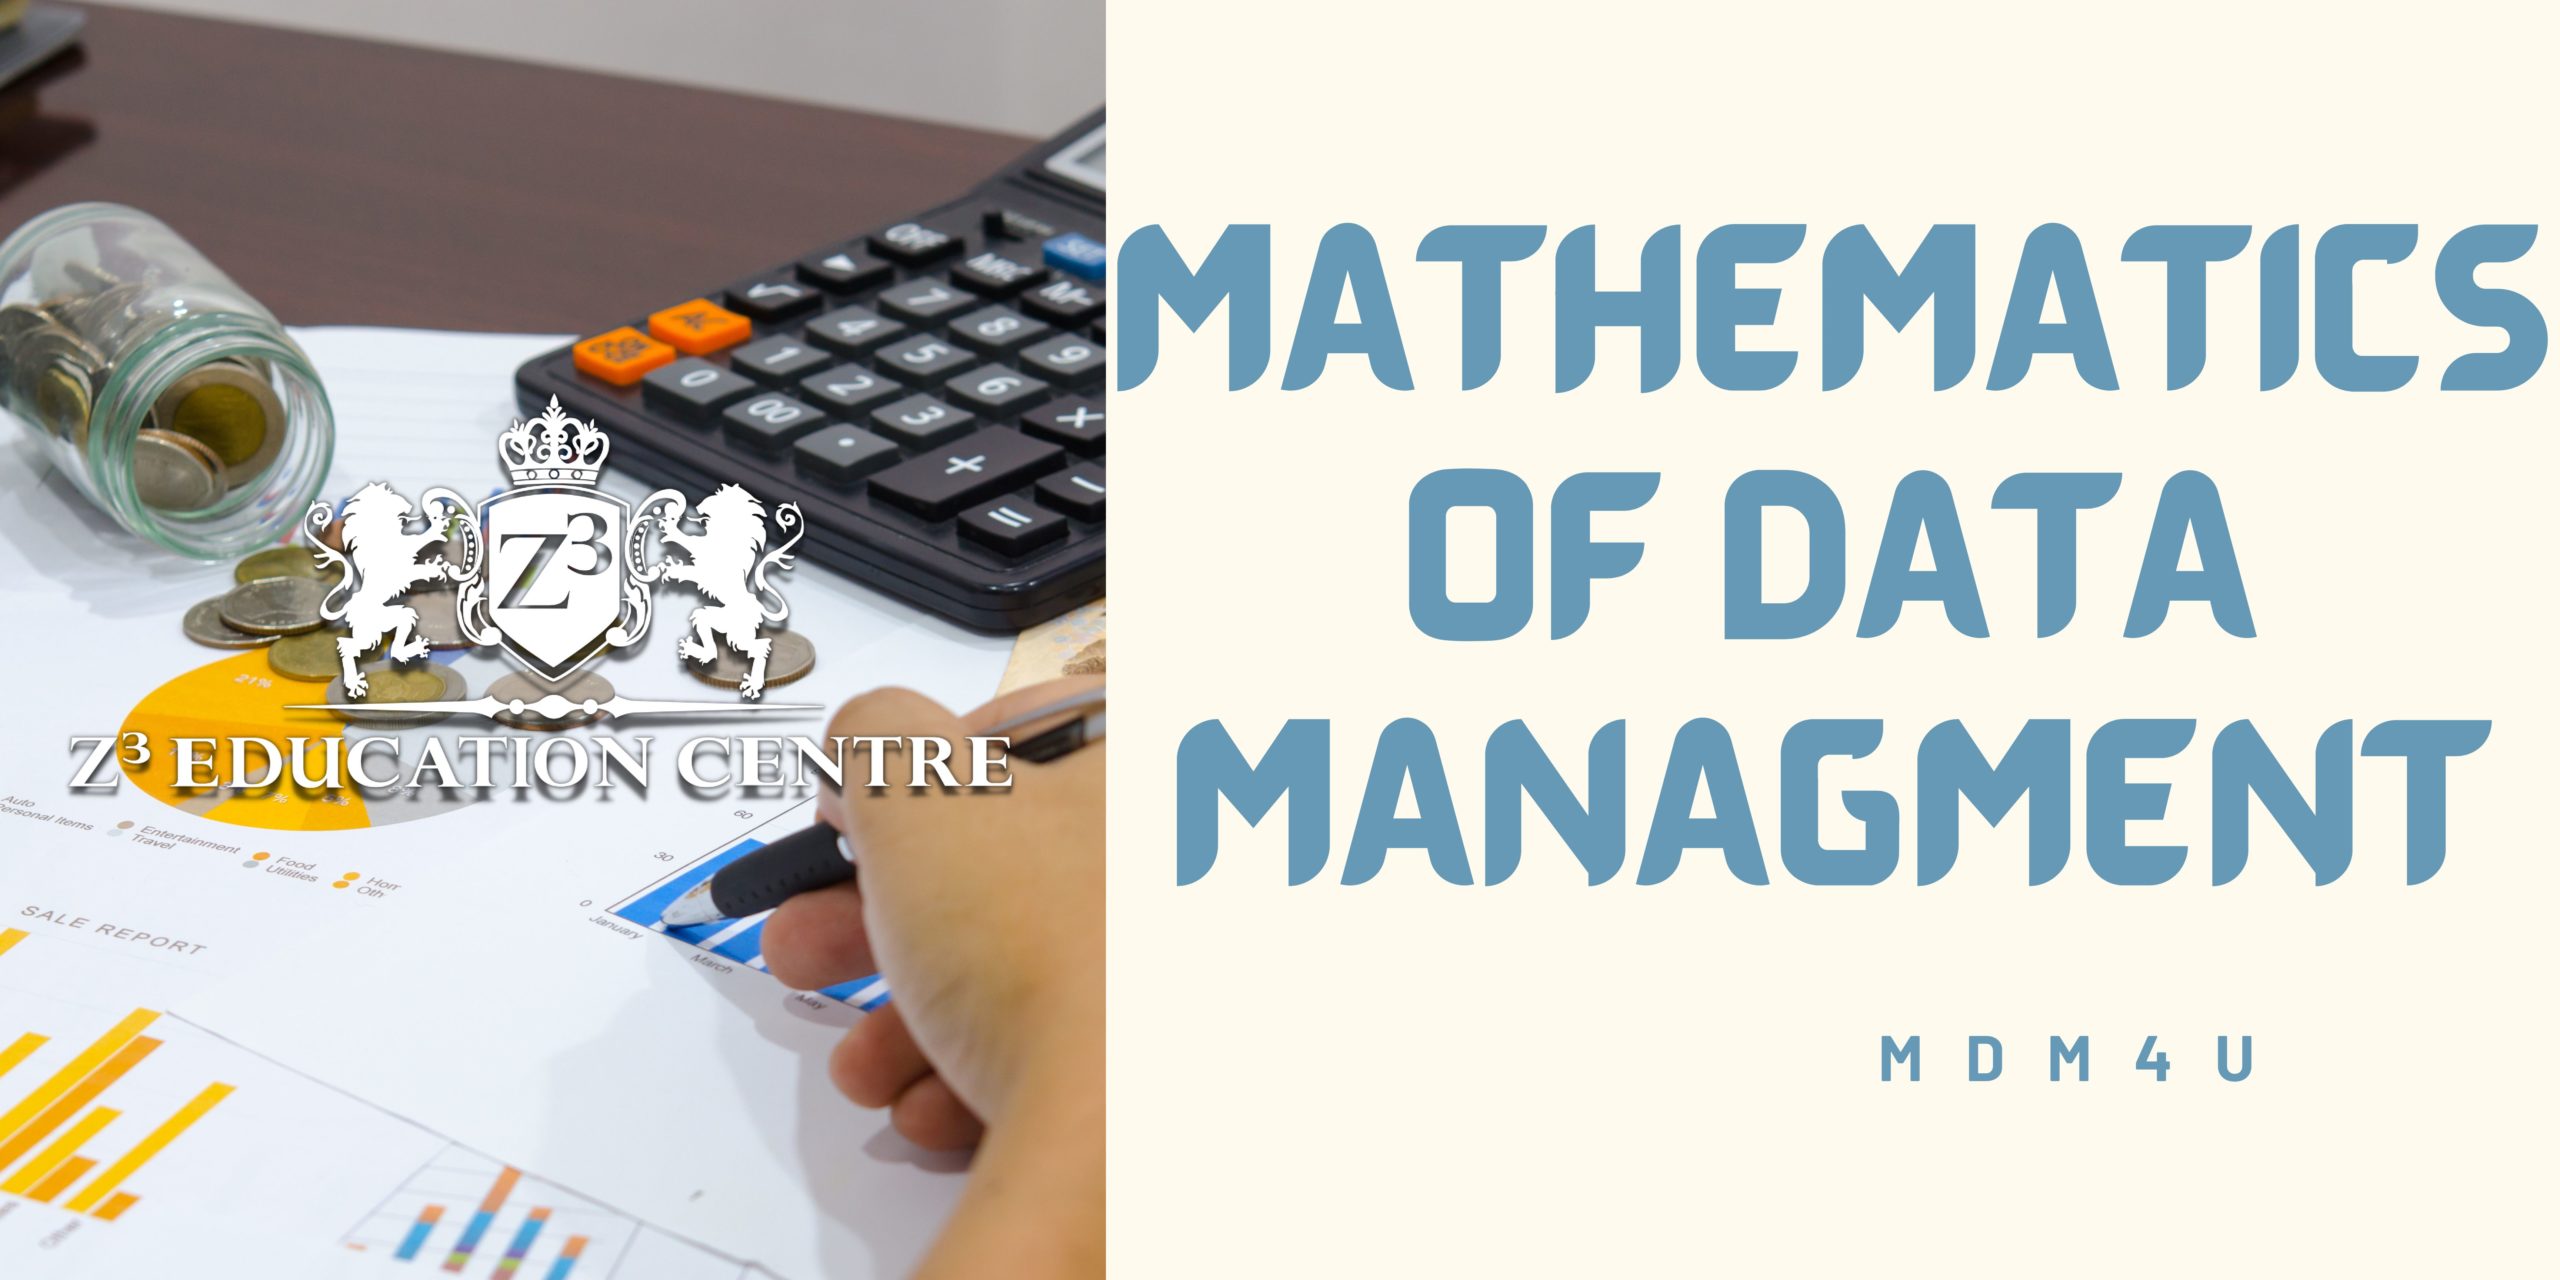 Mathematics of Data Management